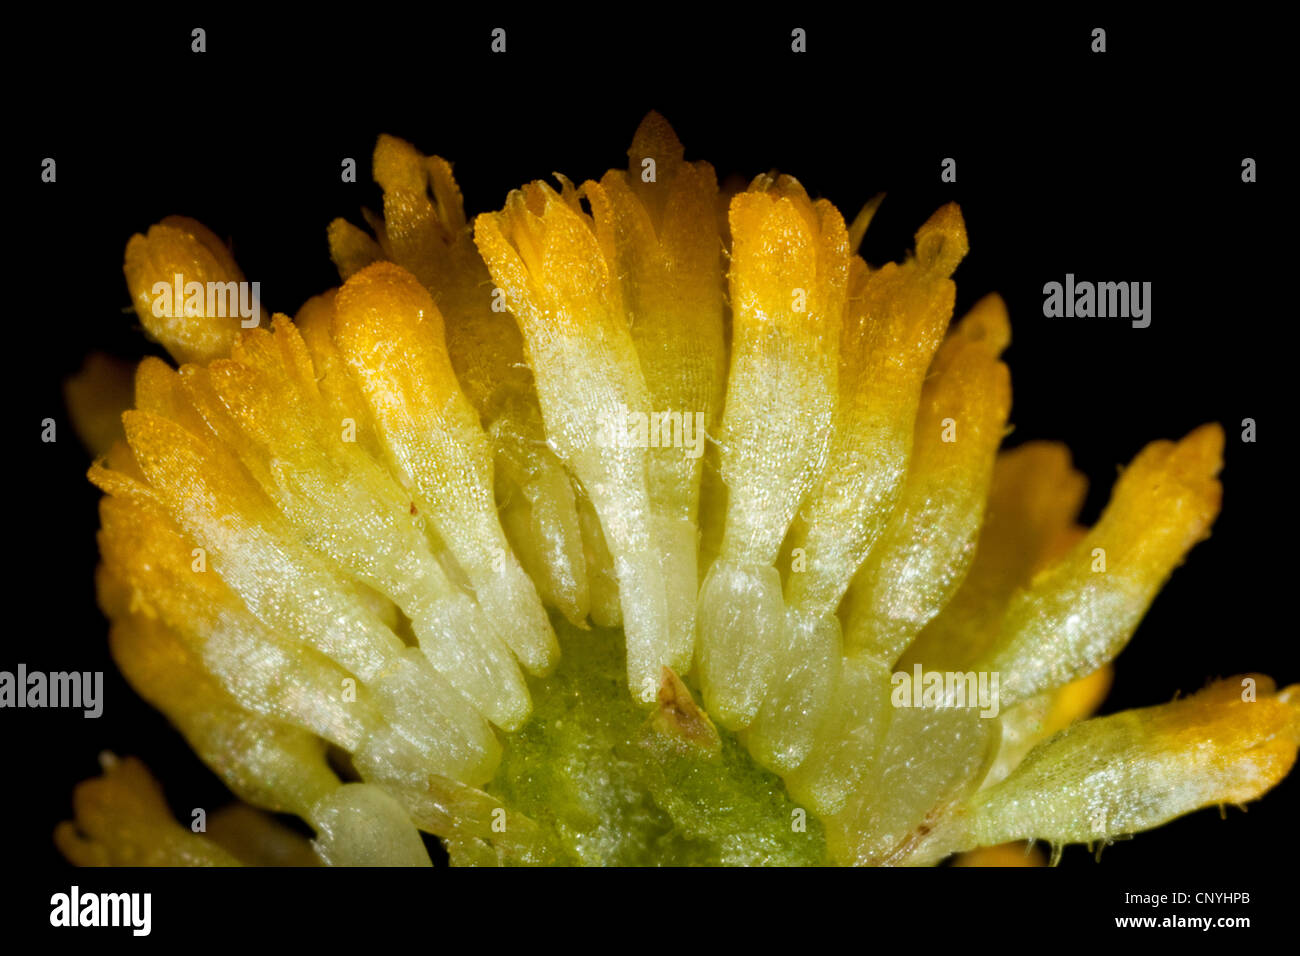 common daisy, lawn daisy, English daisy (Bellis perennis), macro shot of tubular flowers Stock Photo